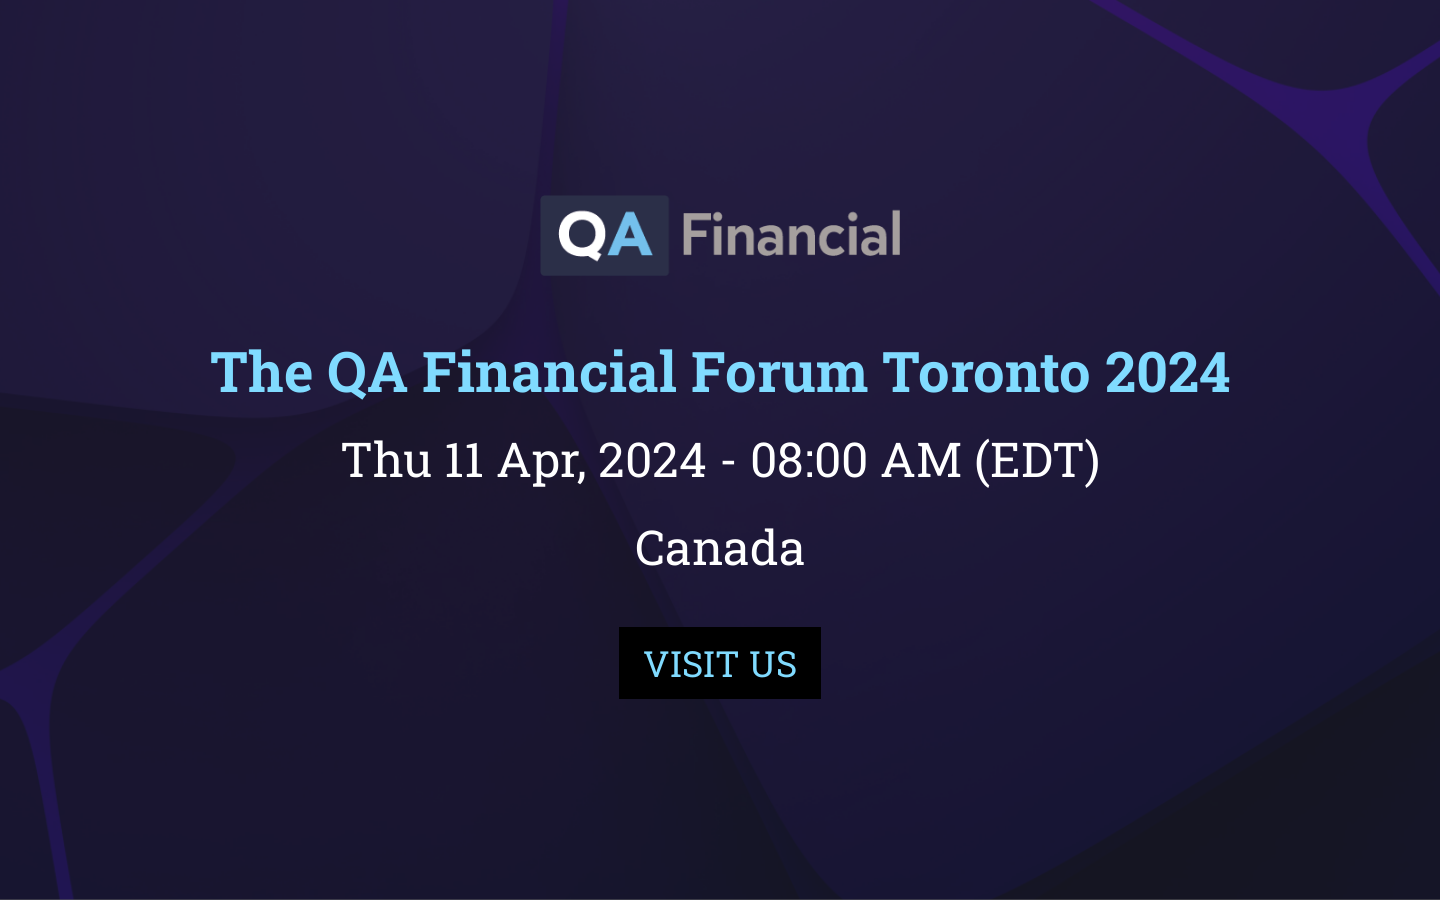 The QA Financial Forum Toronto 2024